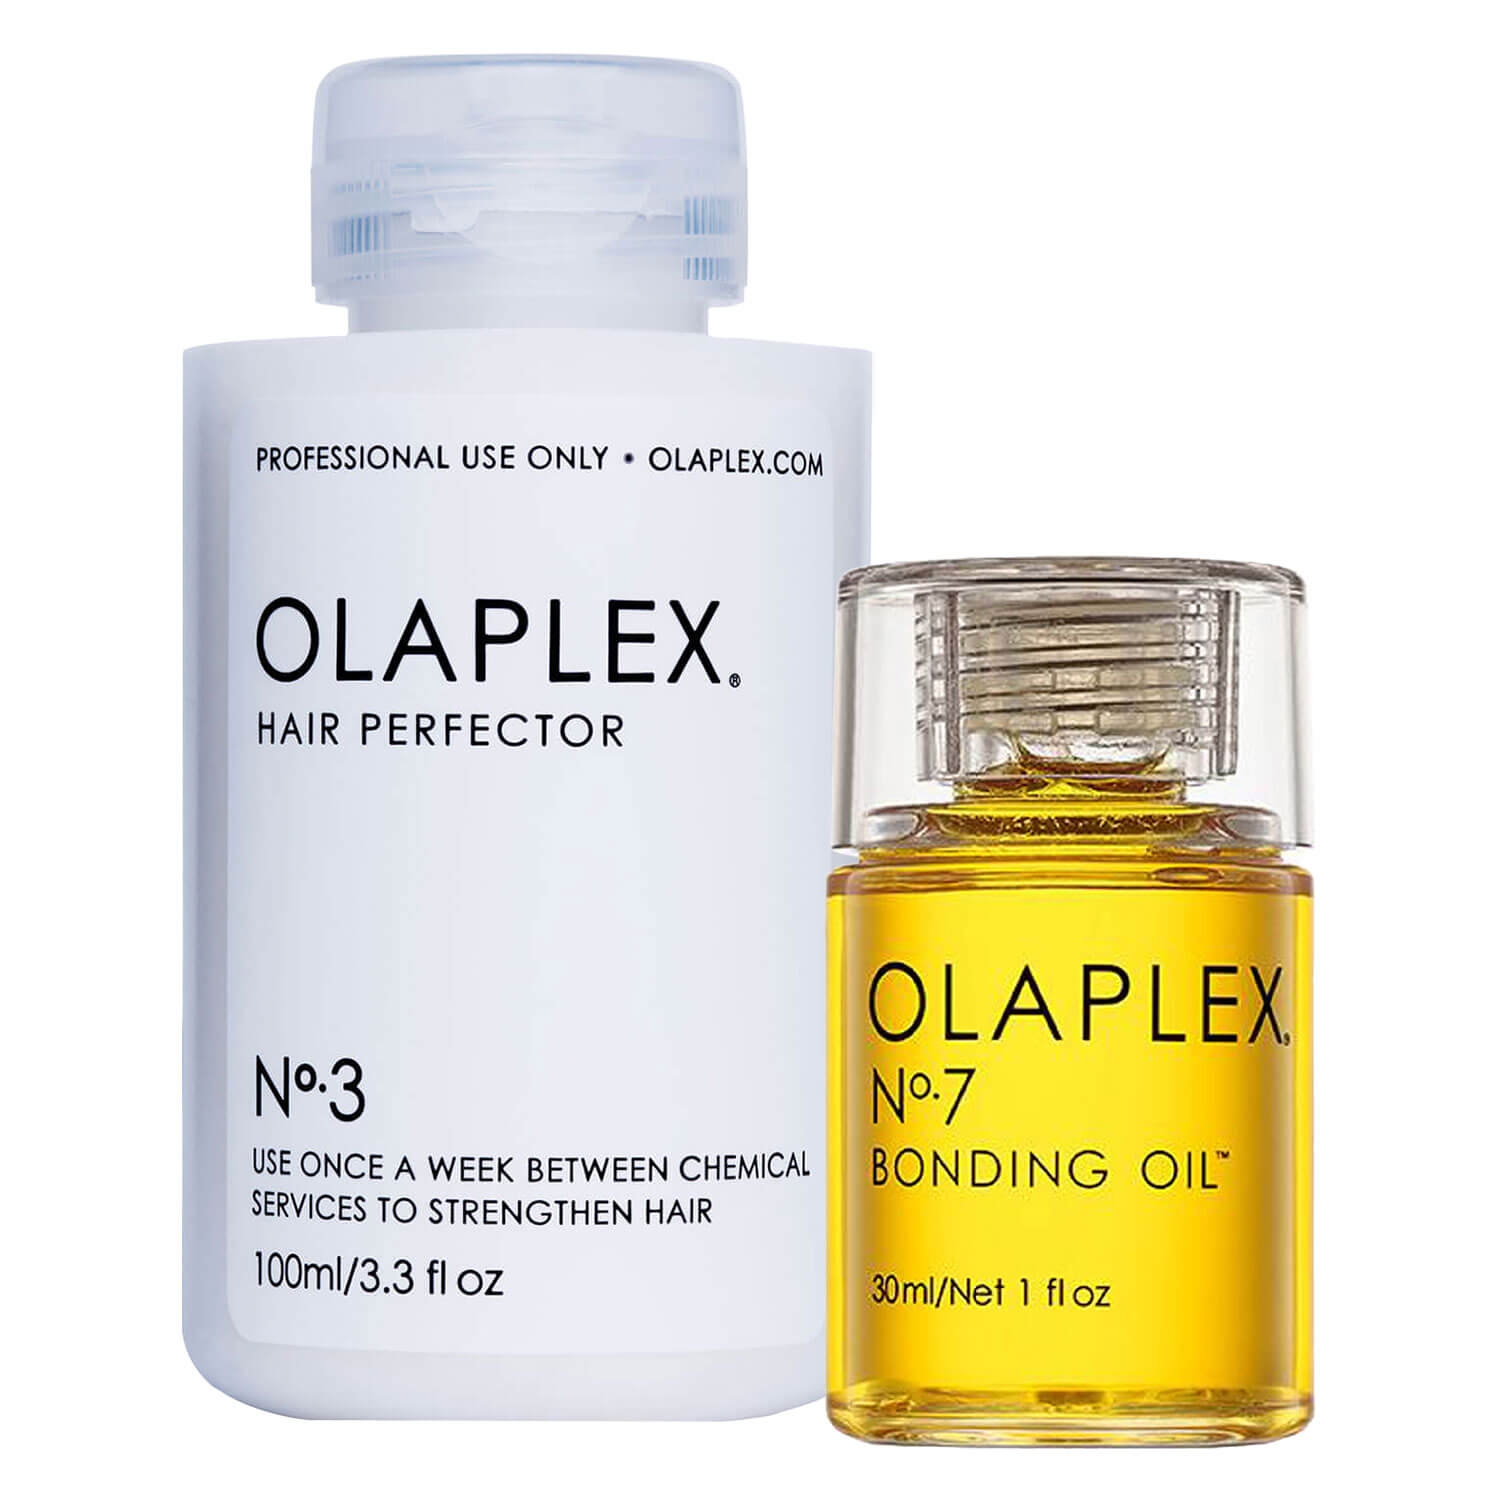 Produktbild von Olaplex - Bonding Oil No. 7 + Olaplex - Hair Perfector No. 3 Special